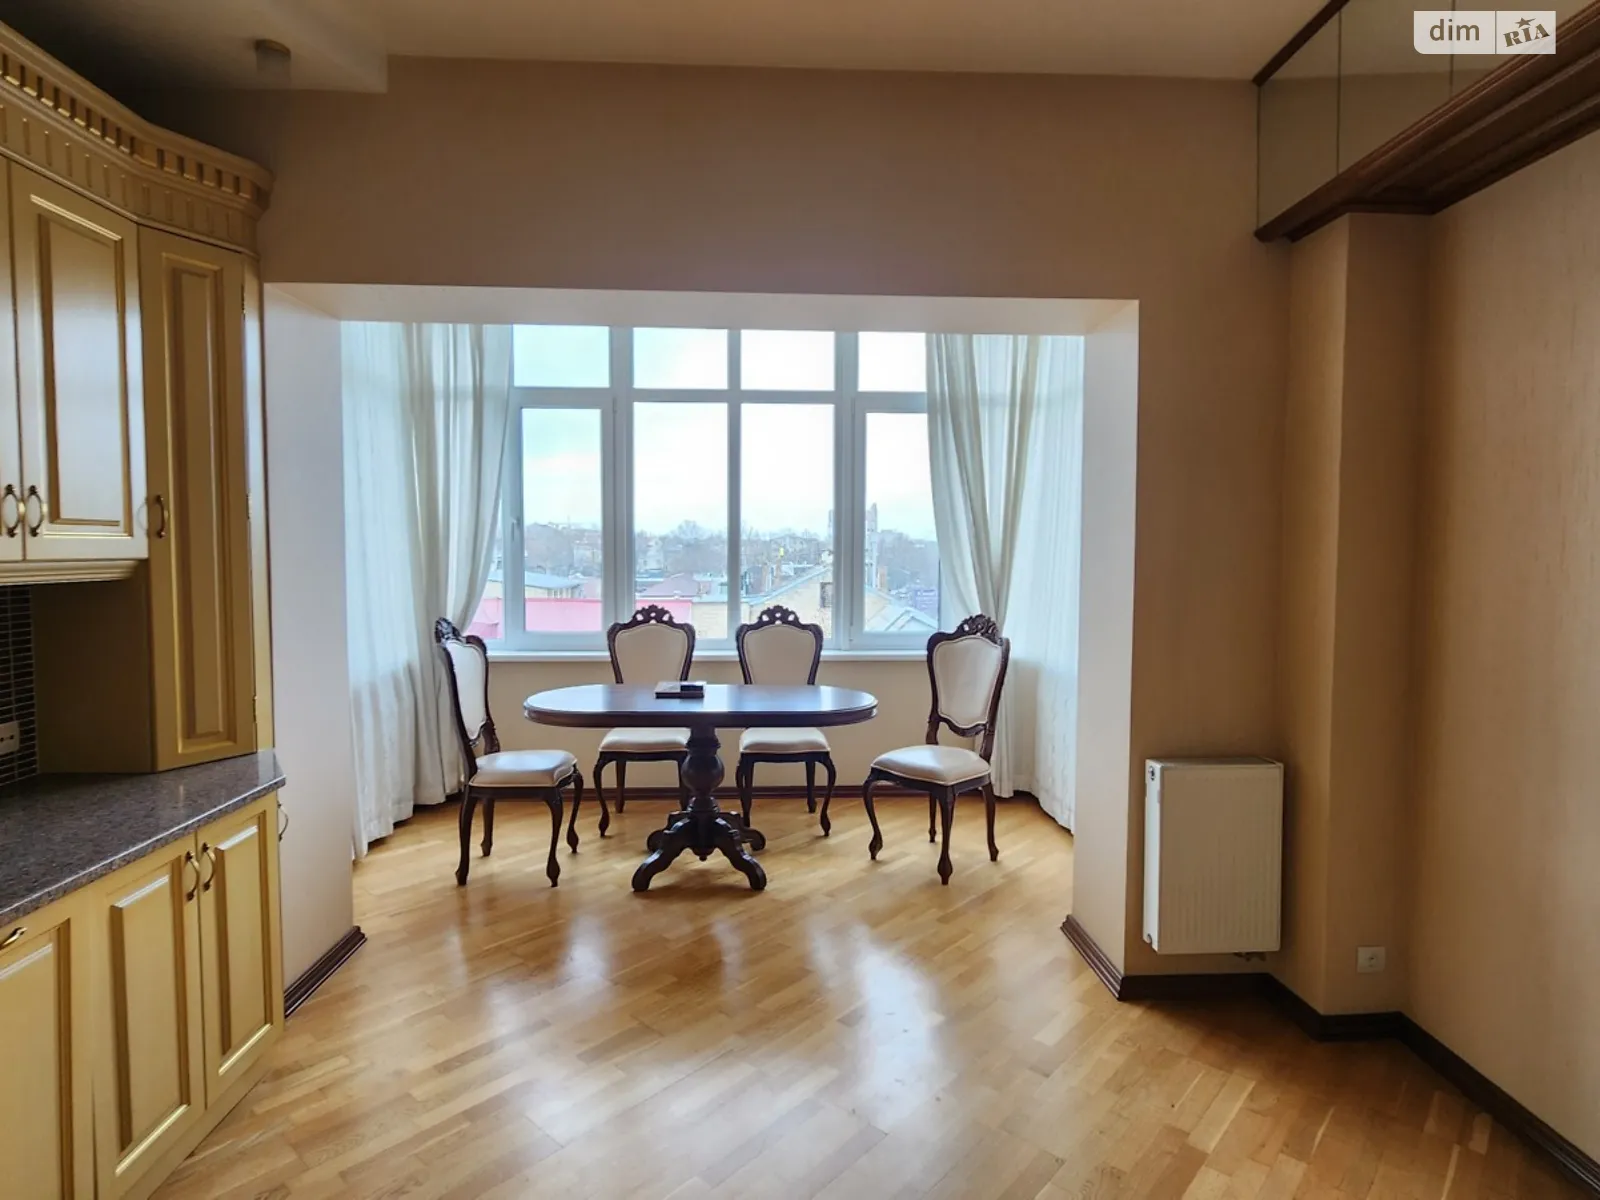 Сдается в аренду 3-комнатная квартира 113 кв. м в Николаеве - фото 2